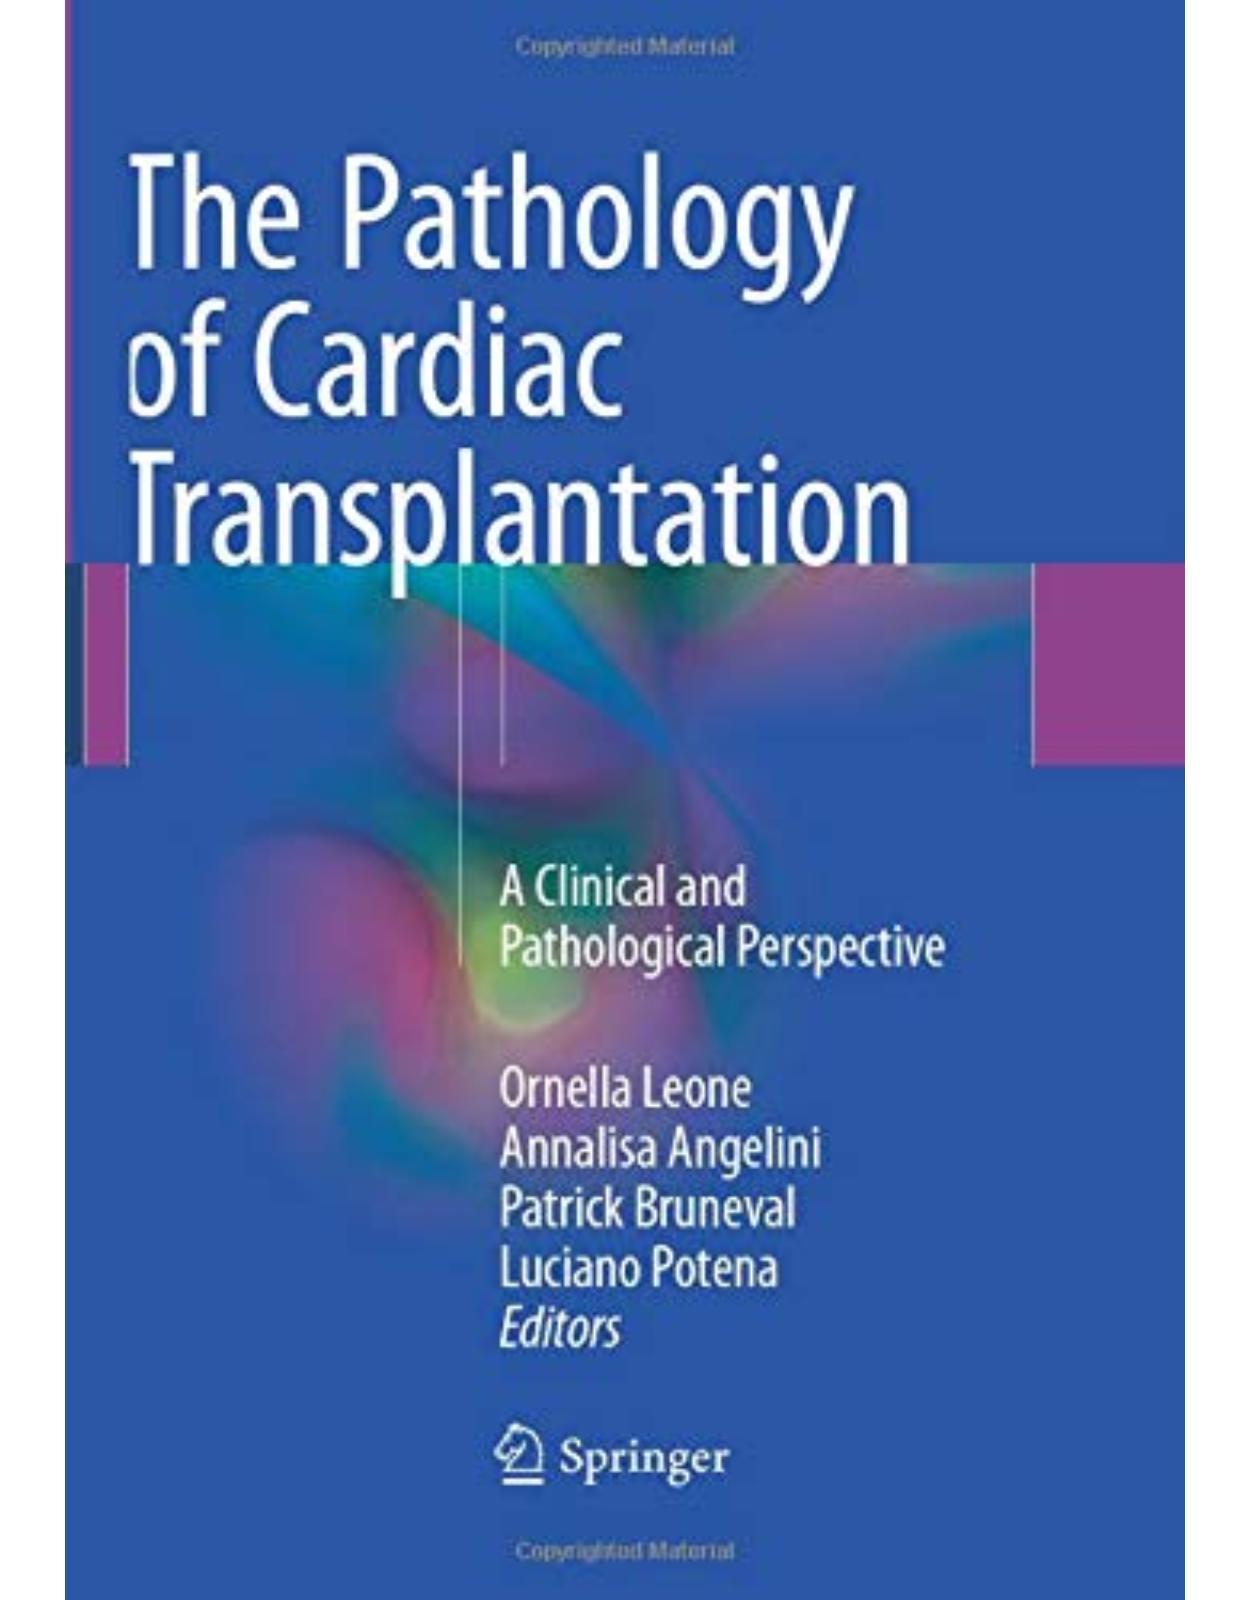 The Pathology of Cardiac Transplantation: A clinical and pathological perspective